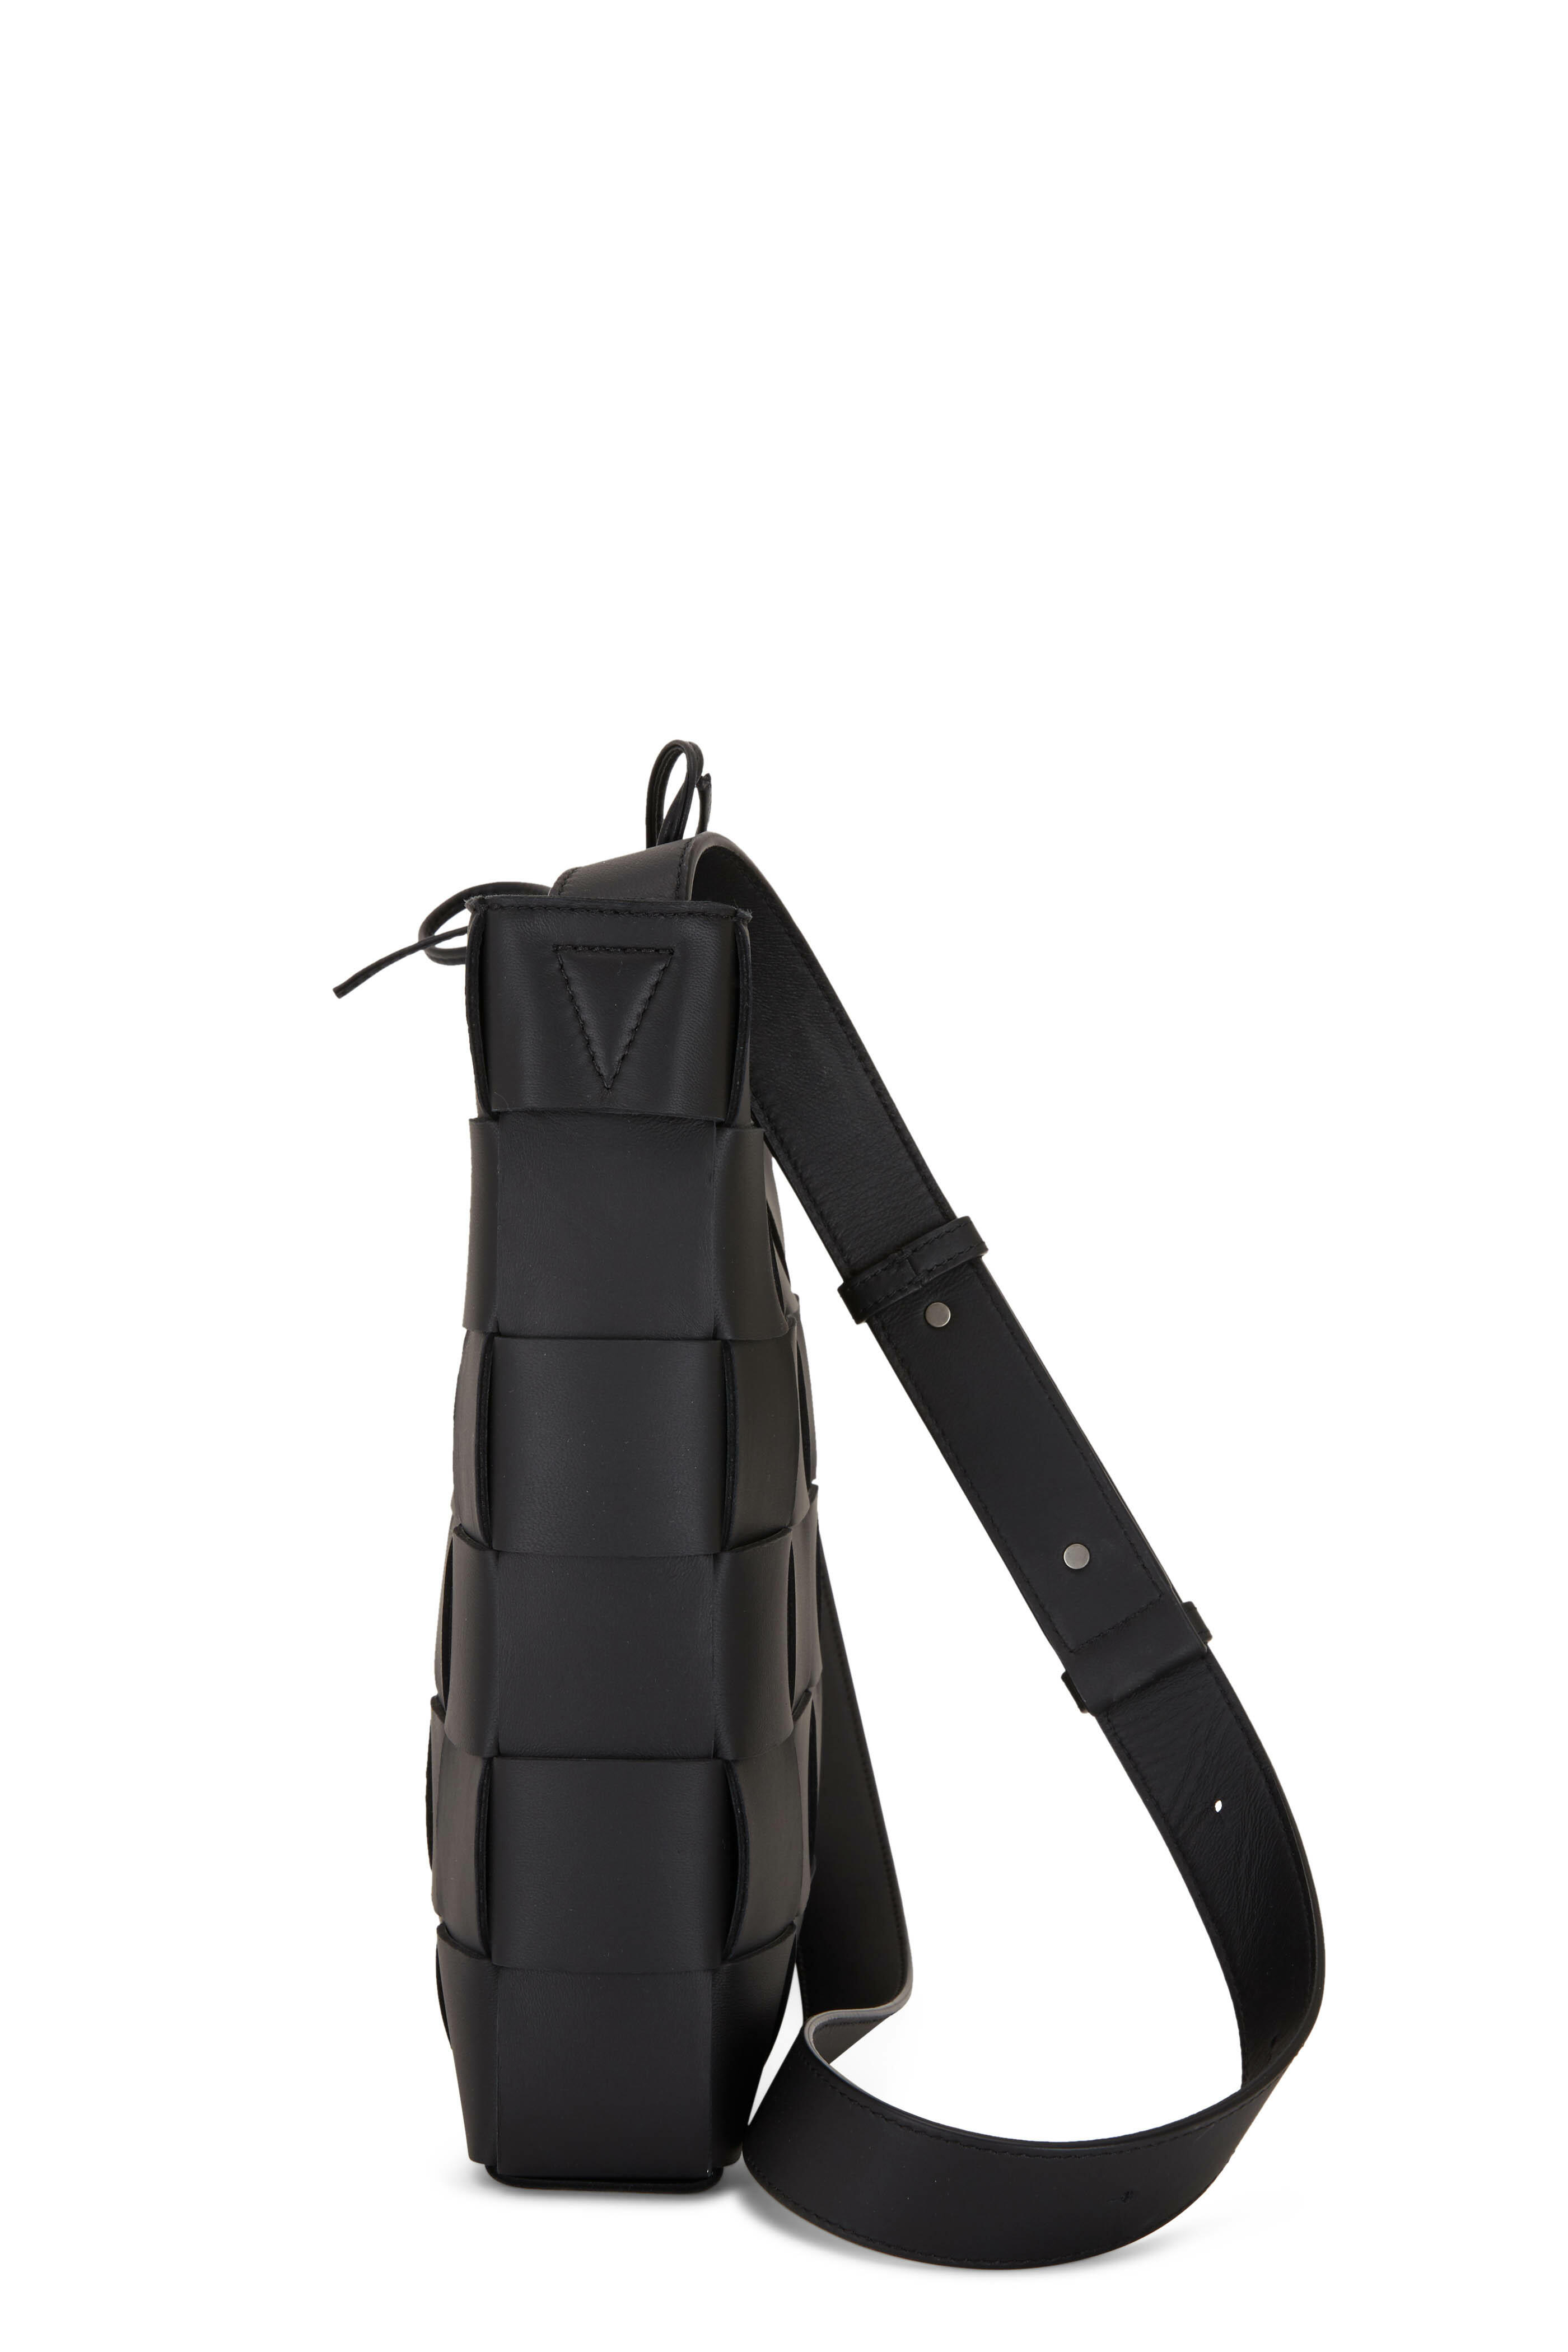 Bottega Veneta Black Nylon And Leather Messenger Bag 548337-Vaye7-4132